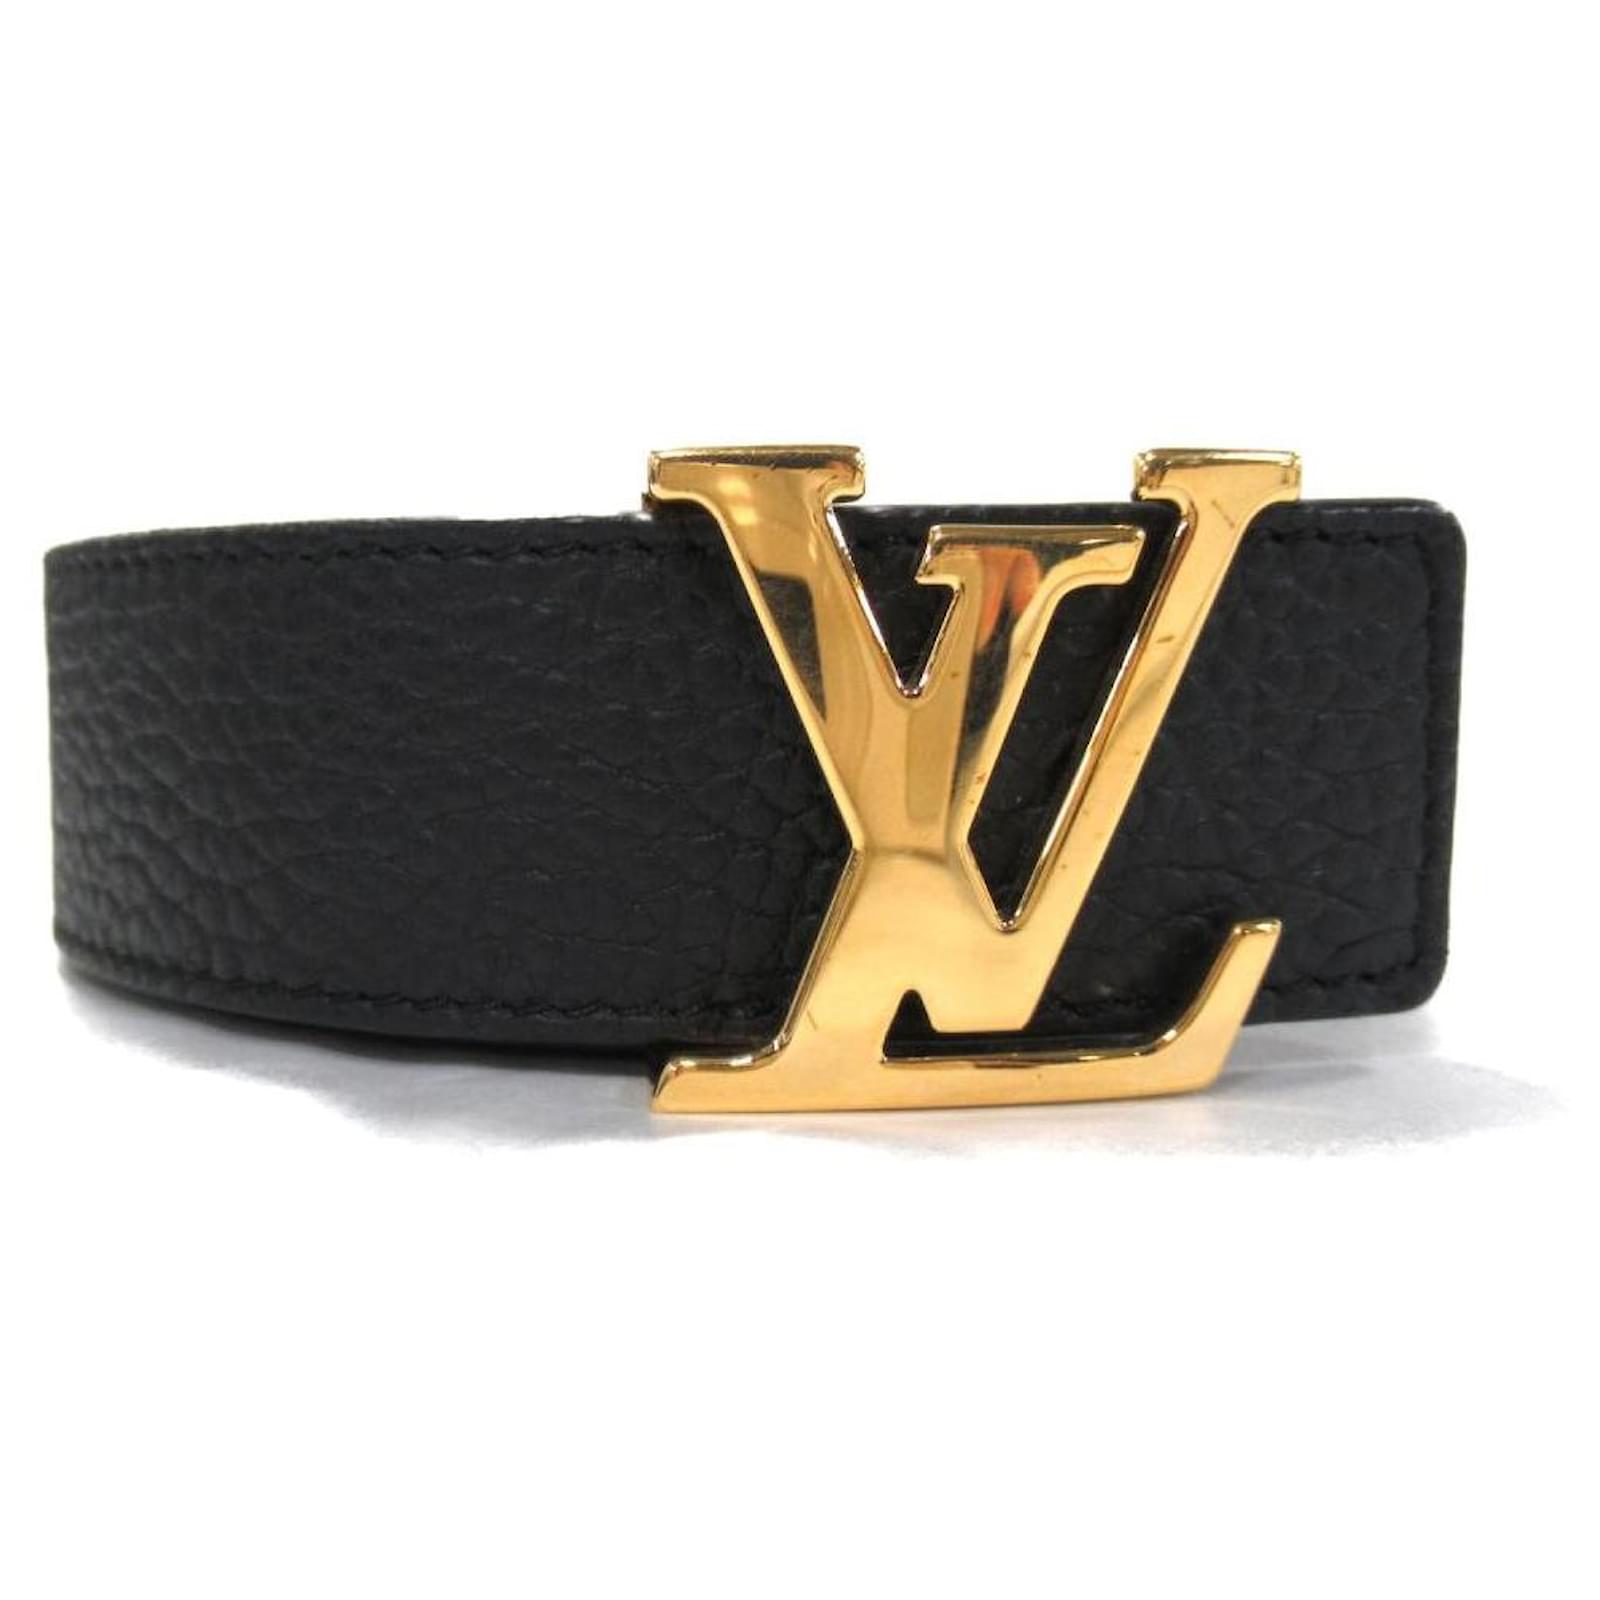 LV Initiales Black Leather Belt 85 / 30